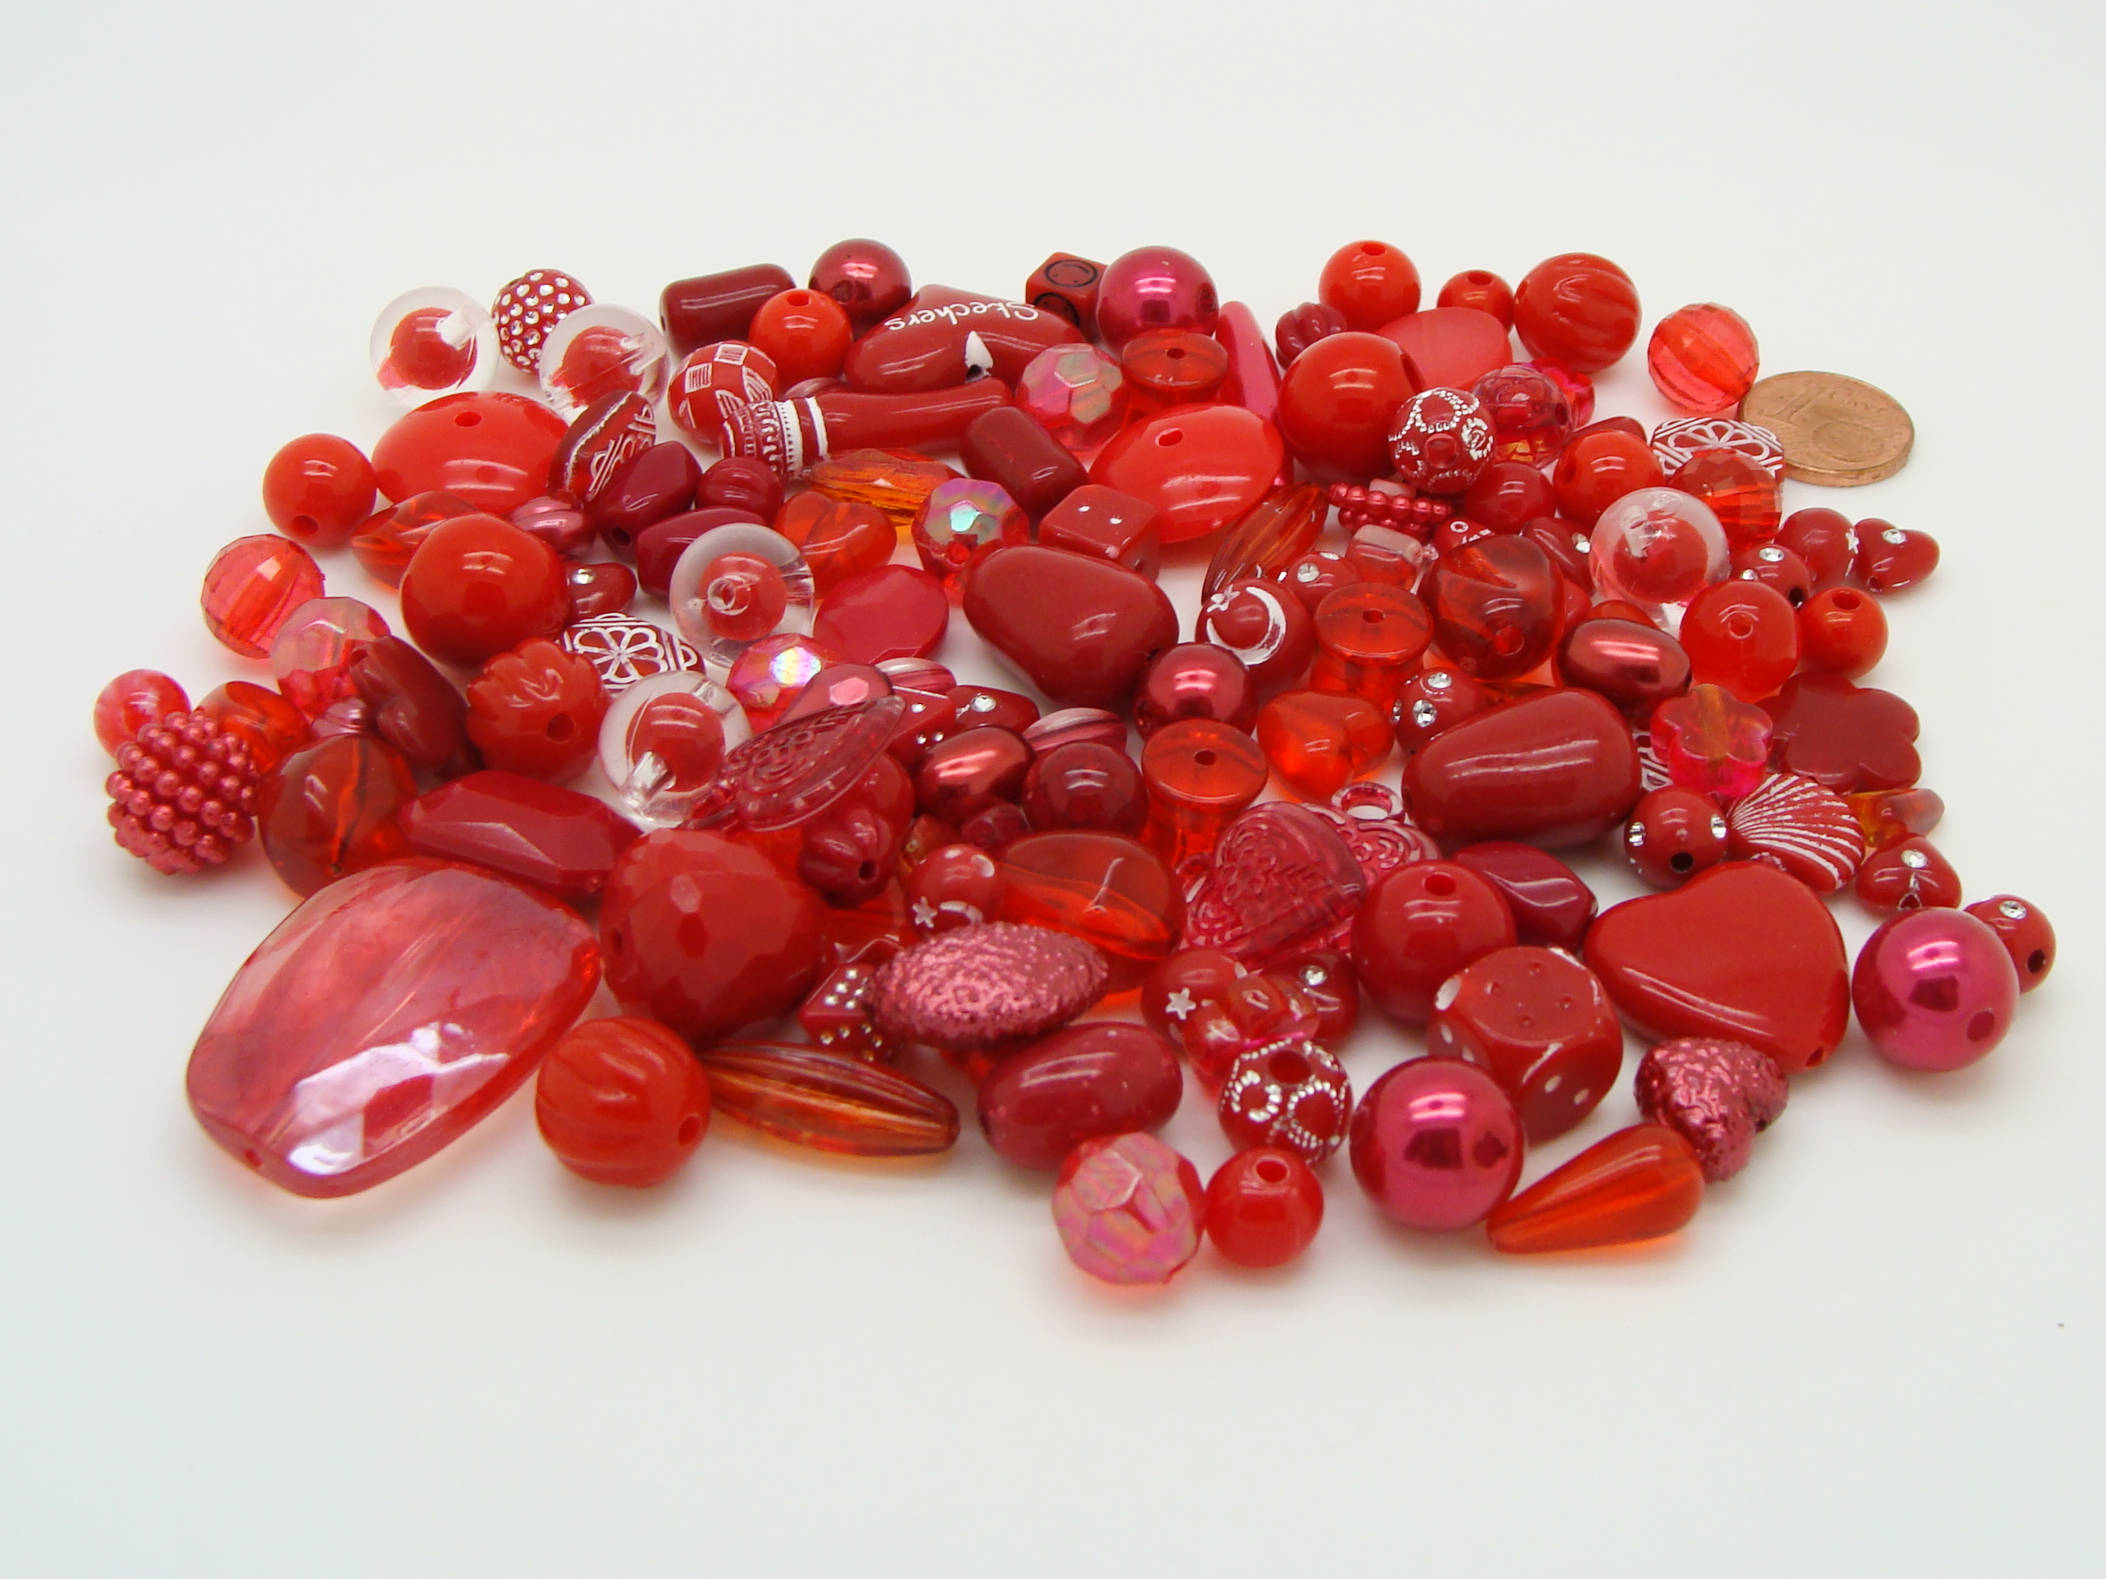 acry-75g-rouge perle rouge acrylique 75 grammes